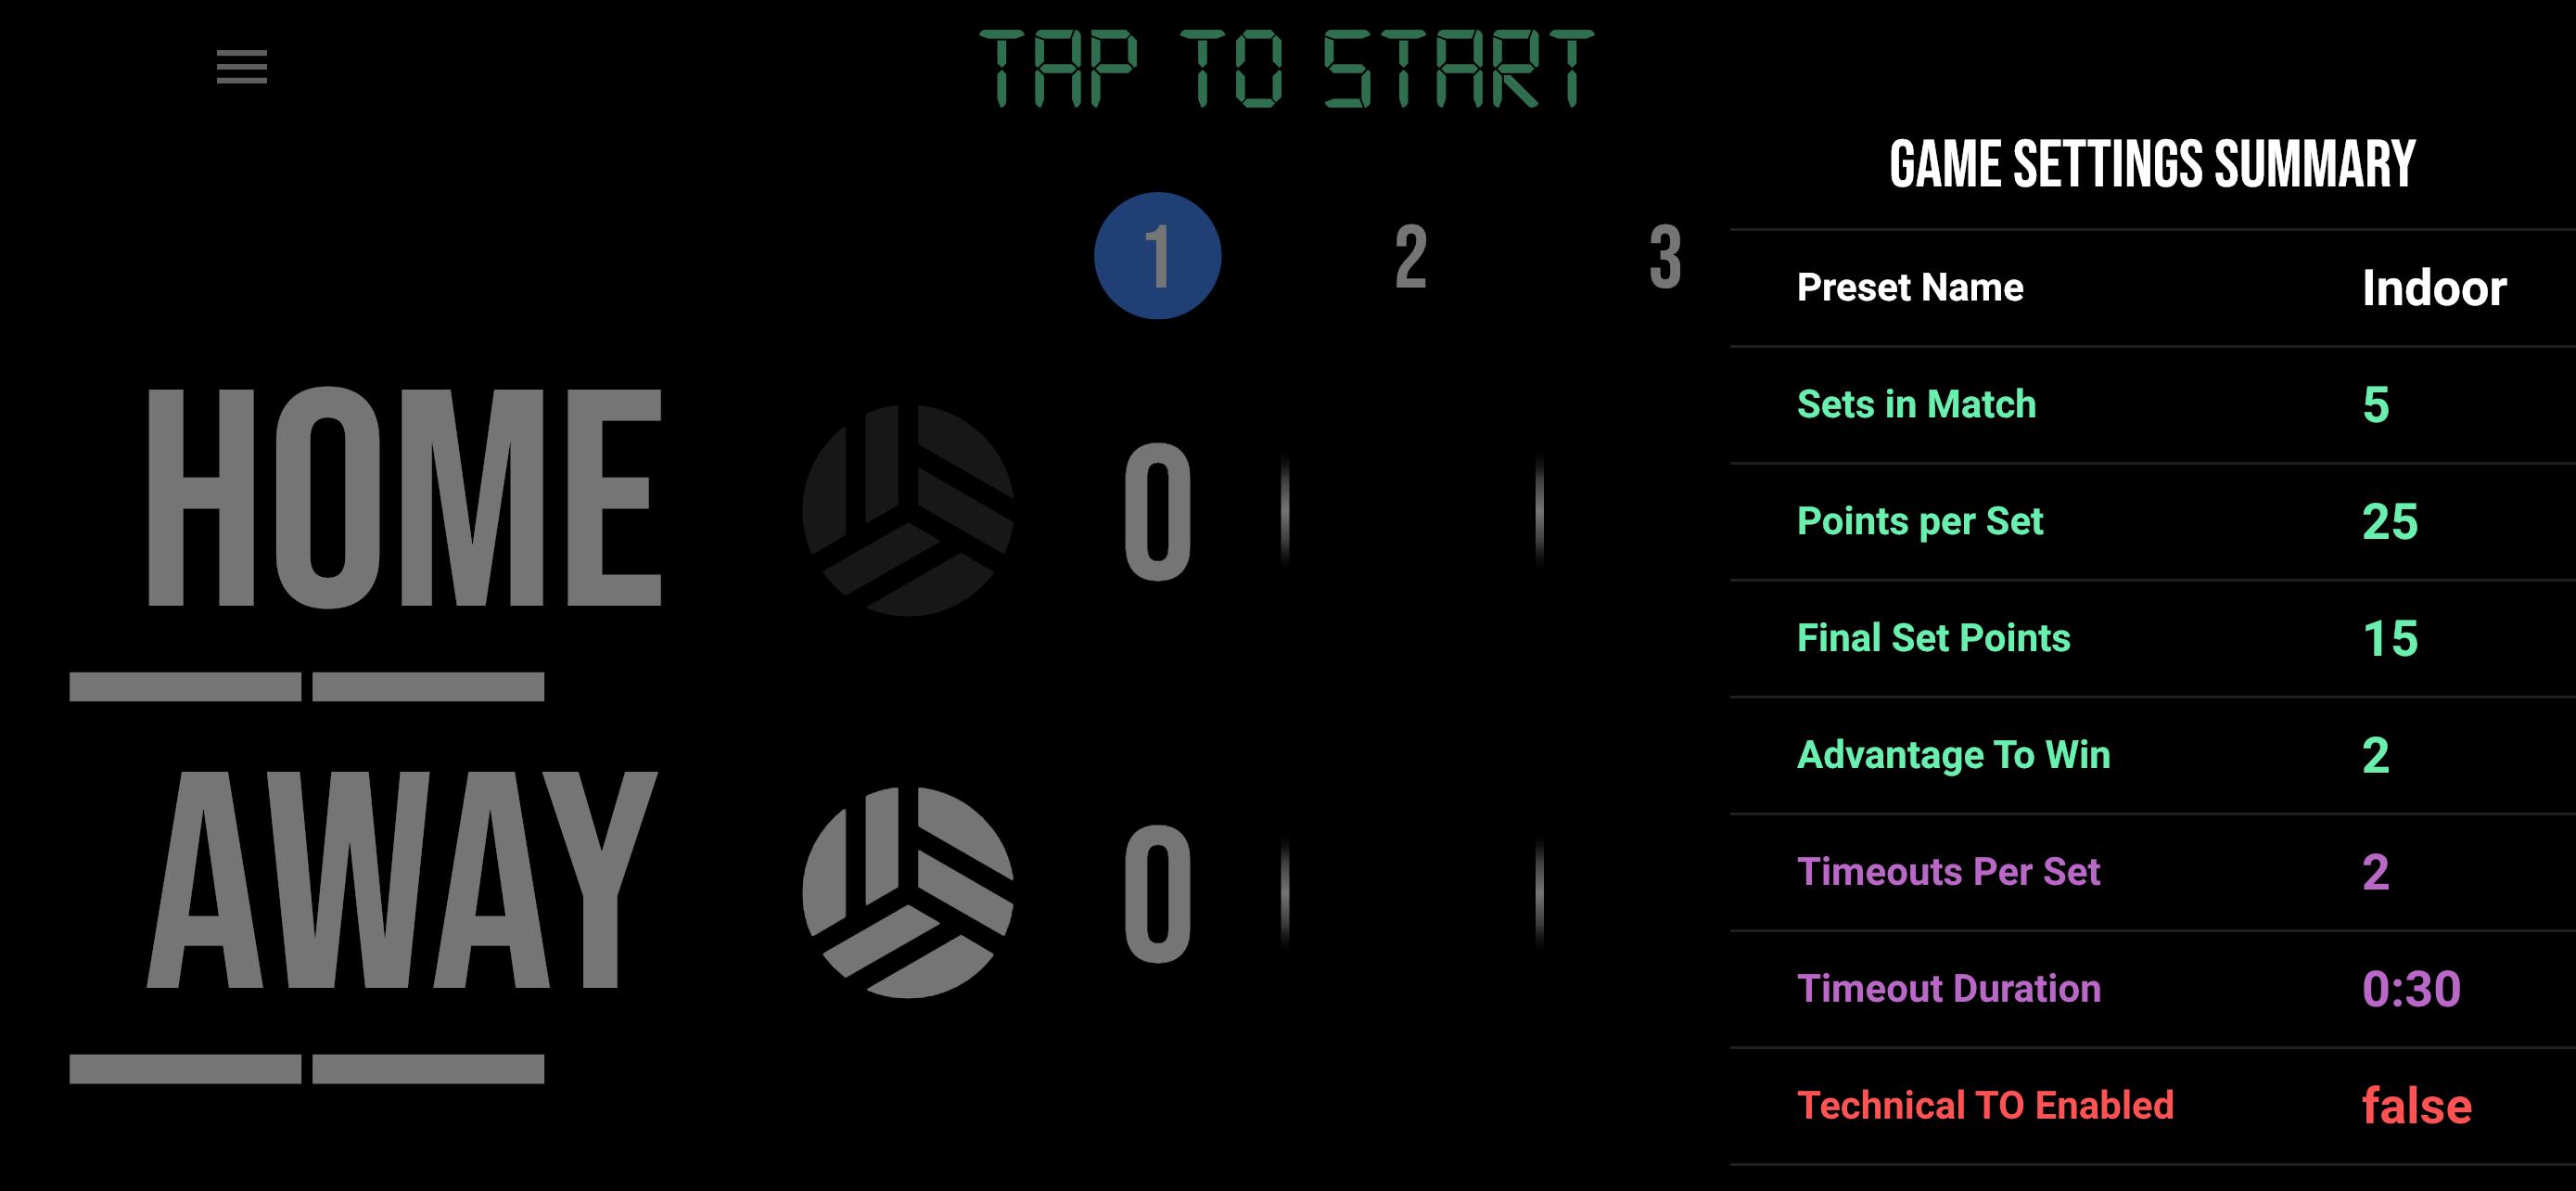 BT Volleyball Scoreboard Najnowsza wersja 4.3.1 na Androida